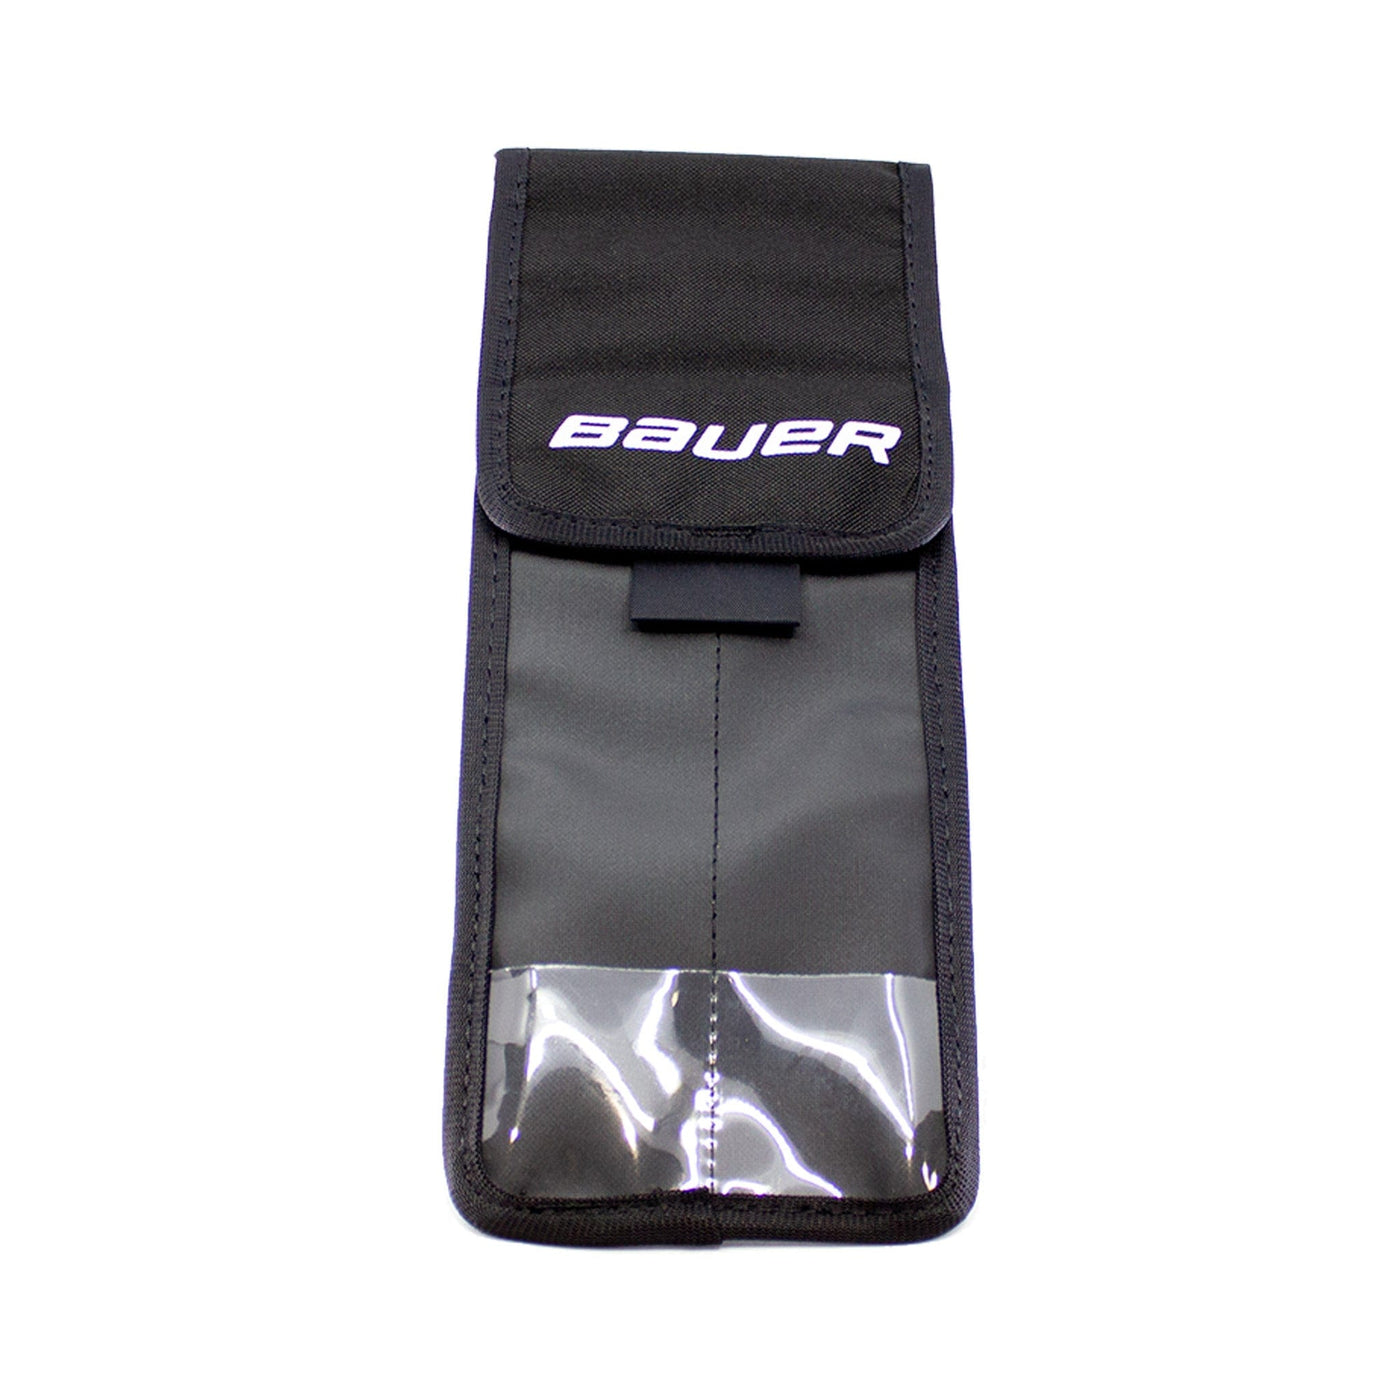 Bauer Player Steel Sleeve